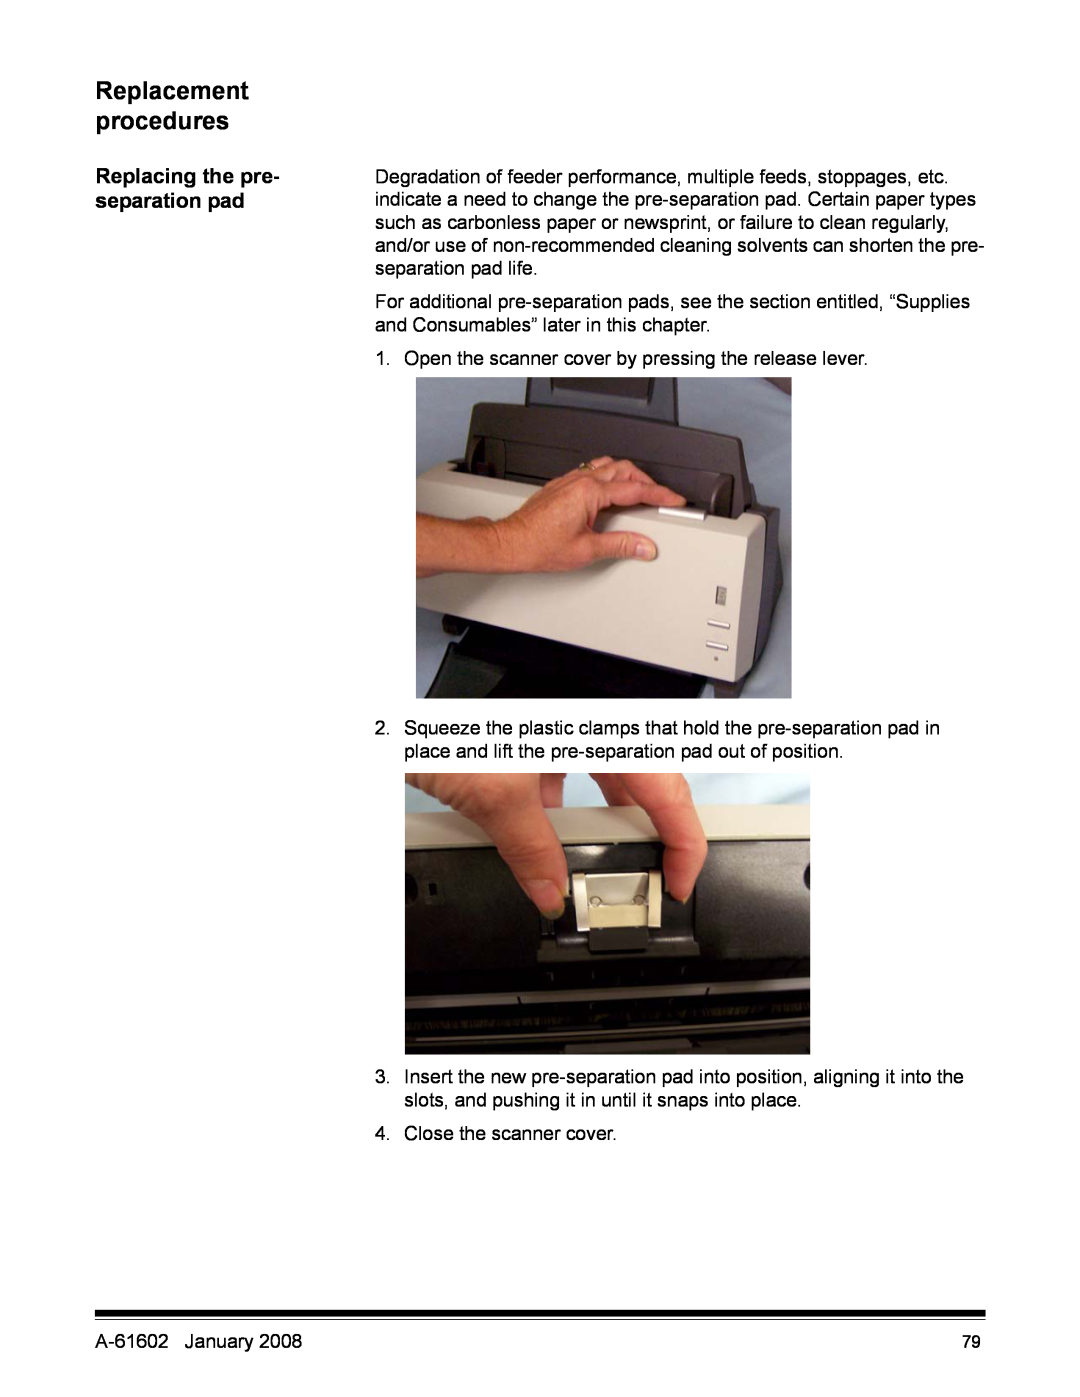 Kodak A-61602 manual Replacement procedures, Replacing the pre- separation pad 